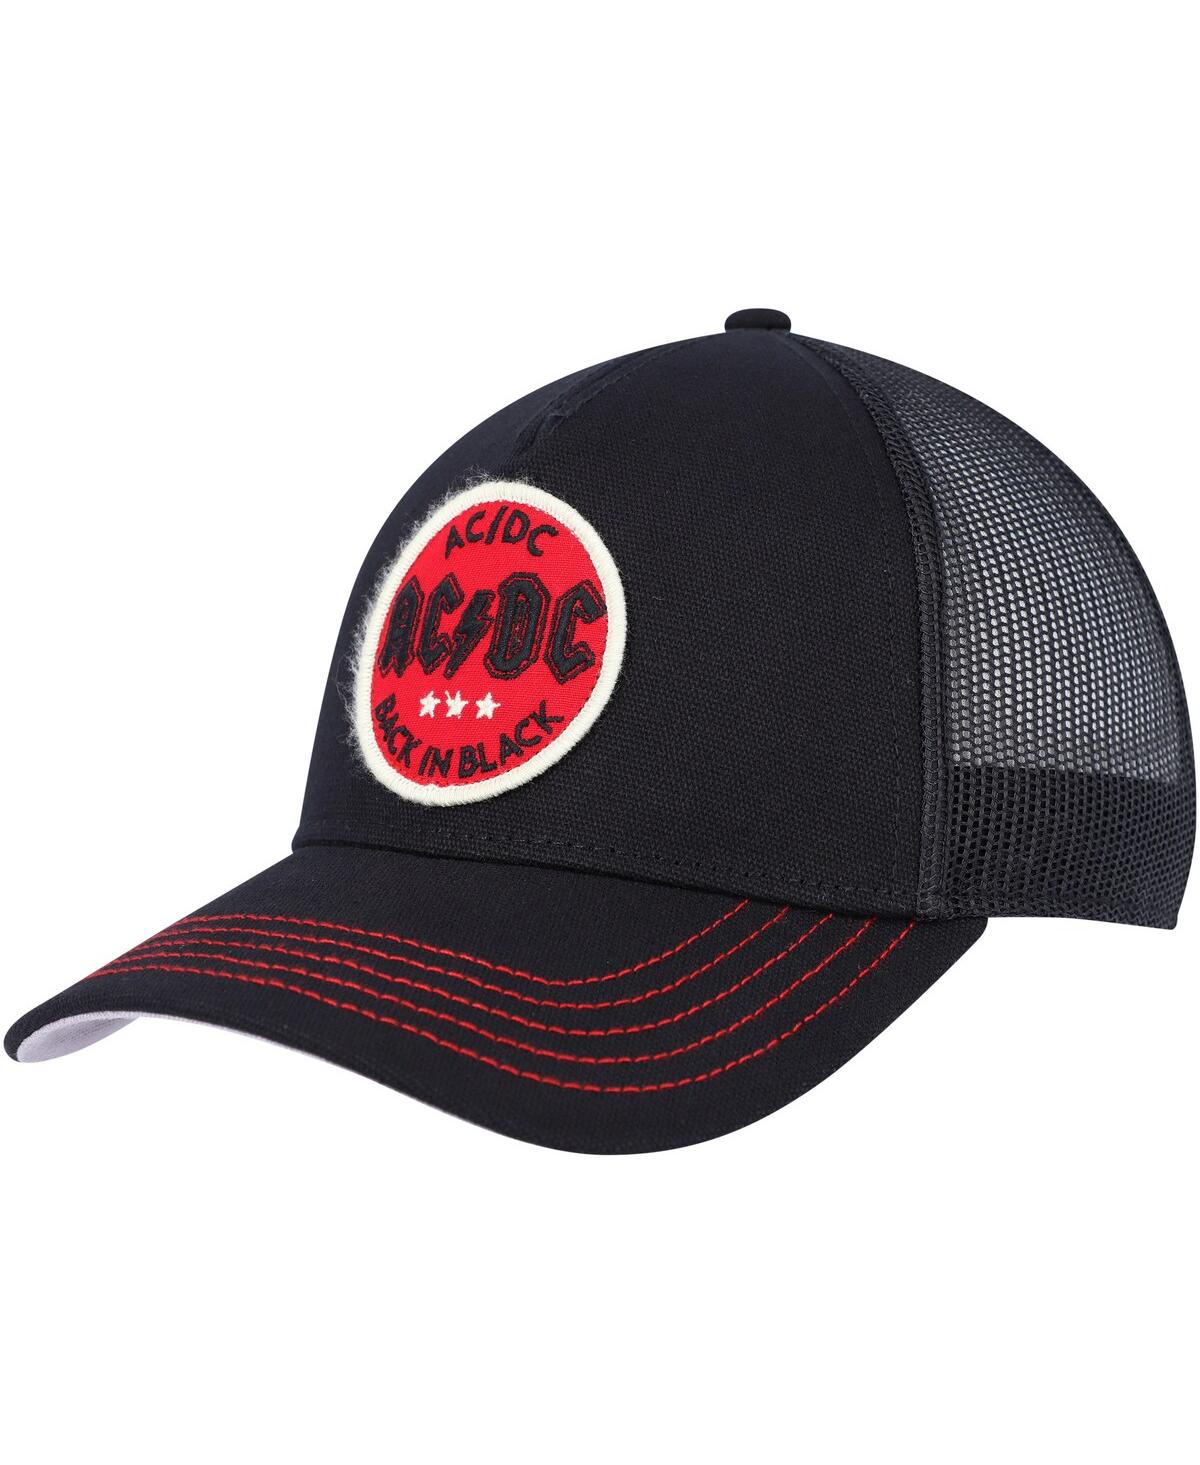 Men's American Needle Black Ac/Dc Valin Trucker Snapback Hat - Black